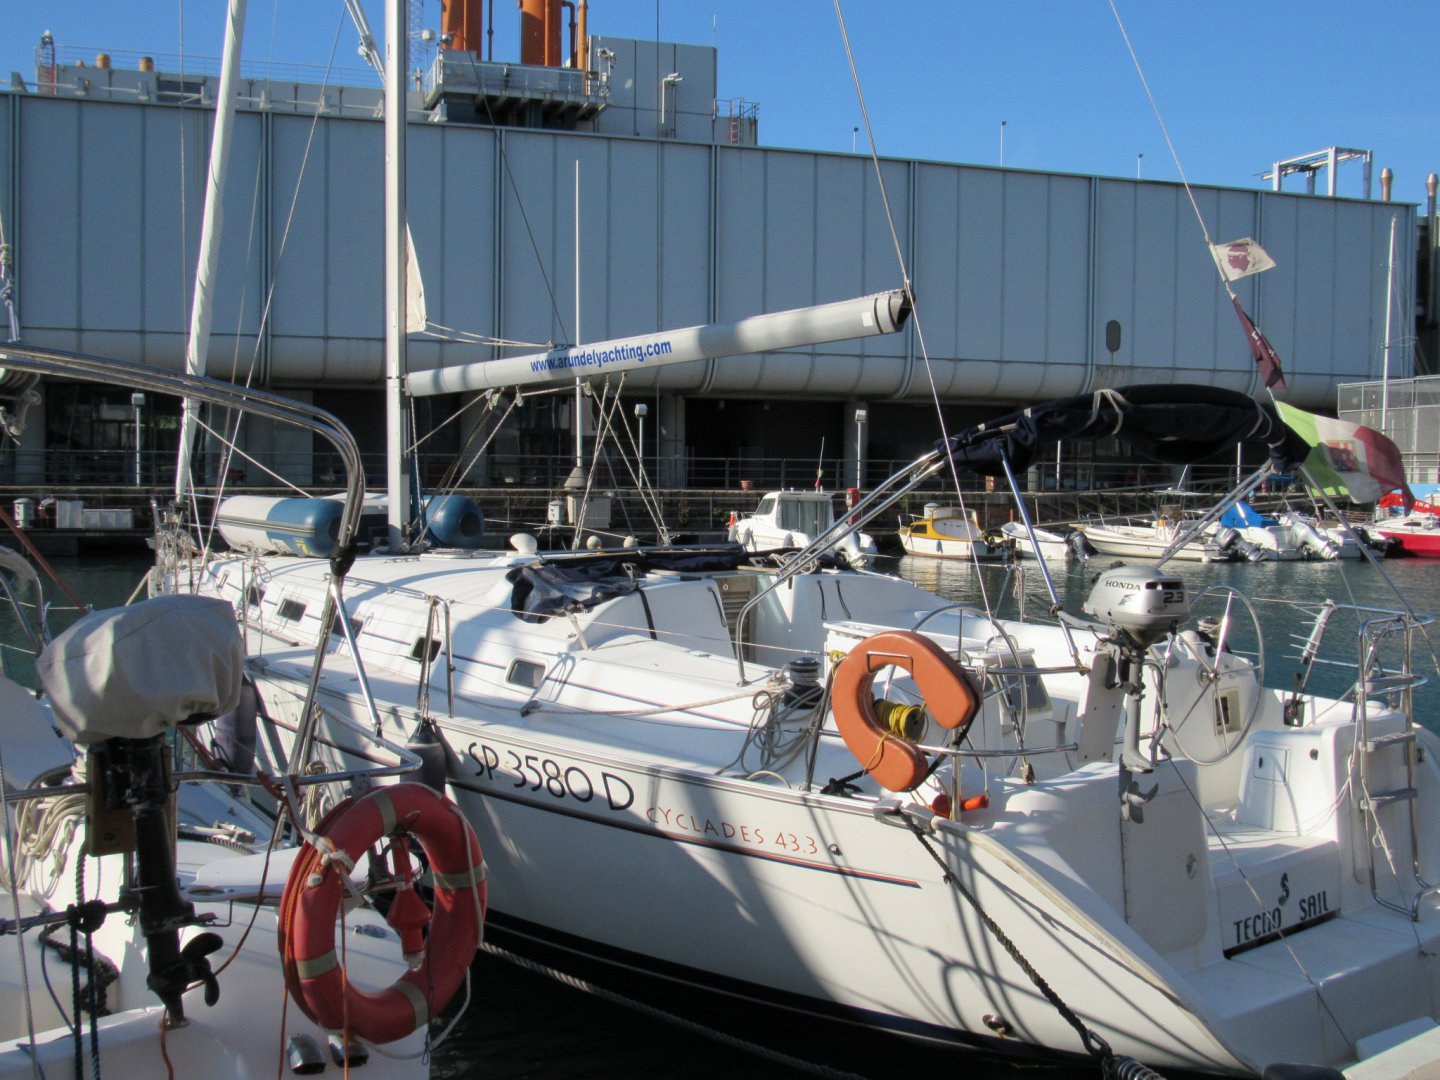 Segelboot Cyclades 43.3